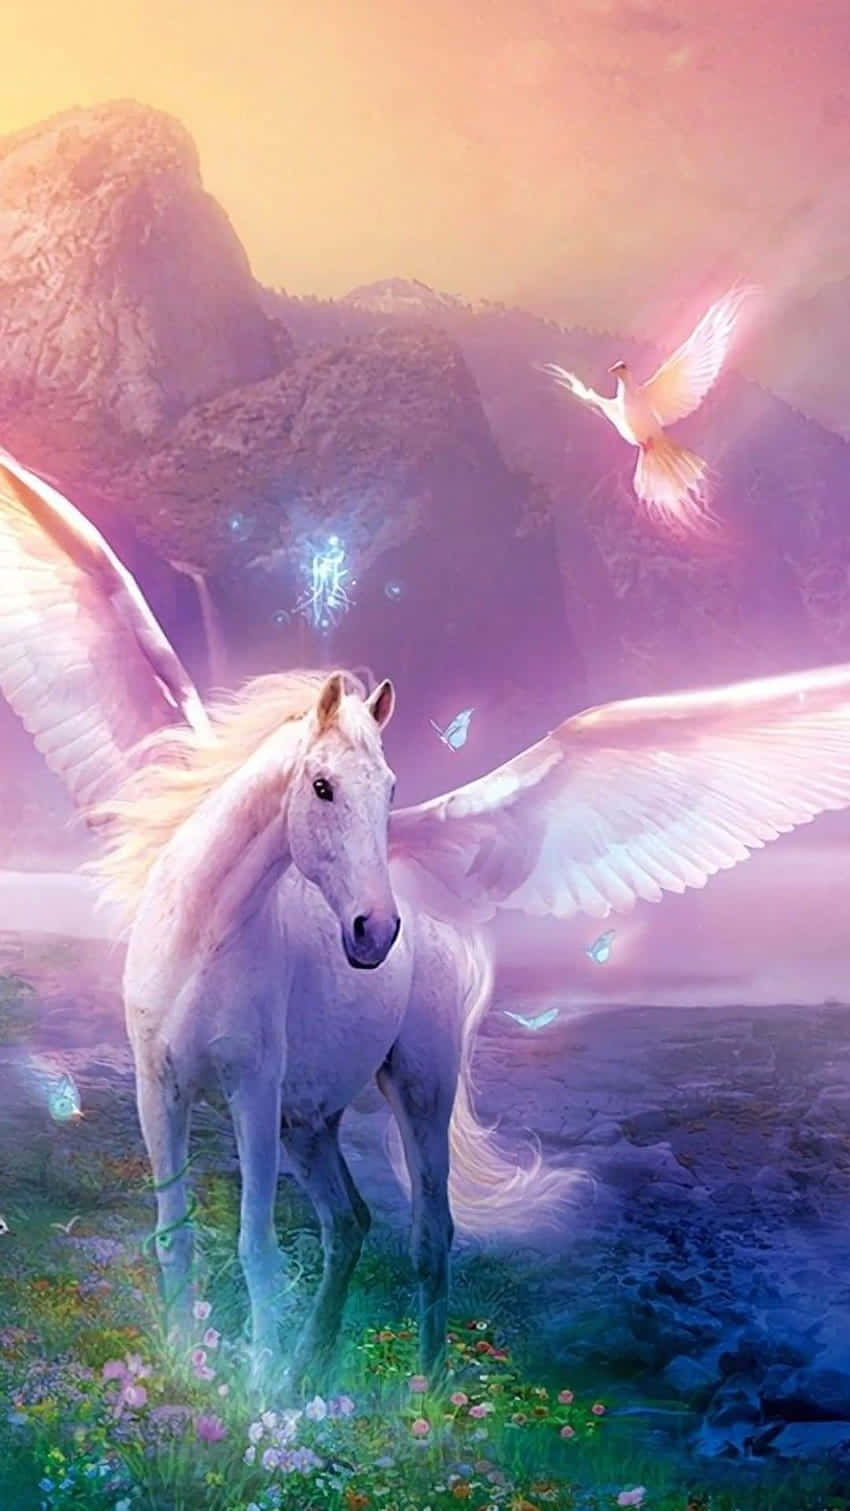 Mystical Winged Unicorn Fantasy Art Wallpaper